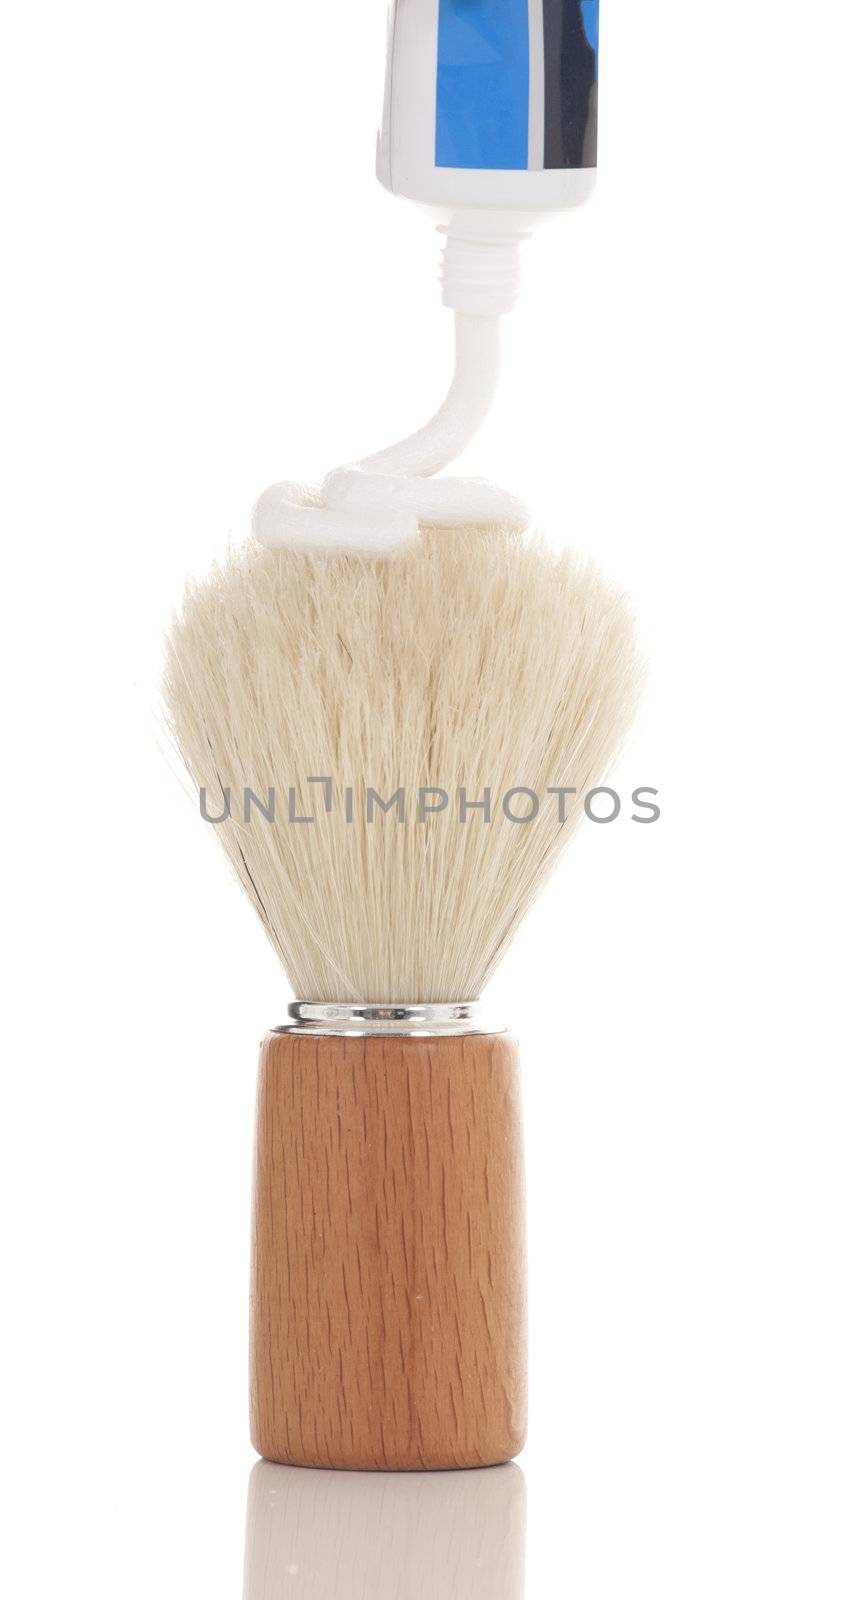 Retro badger shaving brush with a dollop of shaving cream